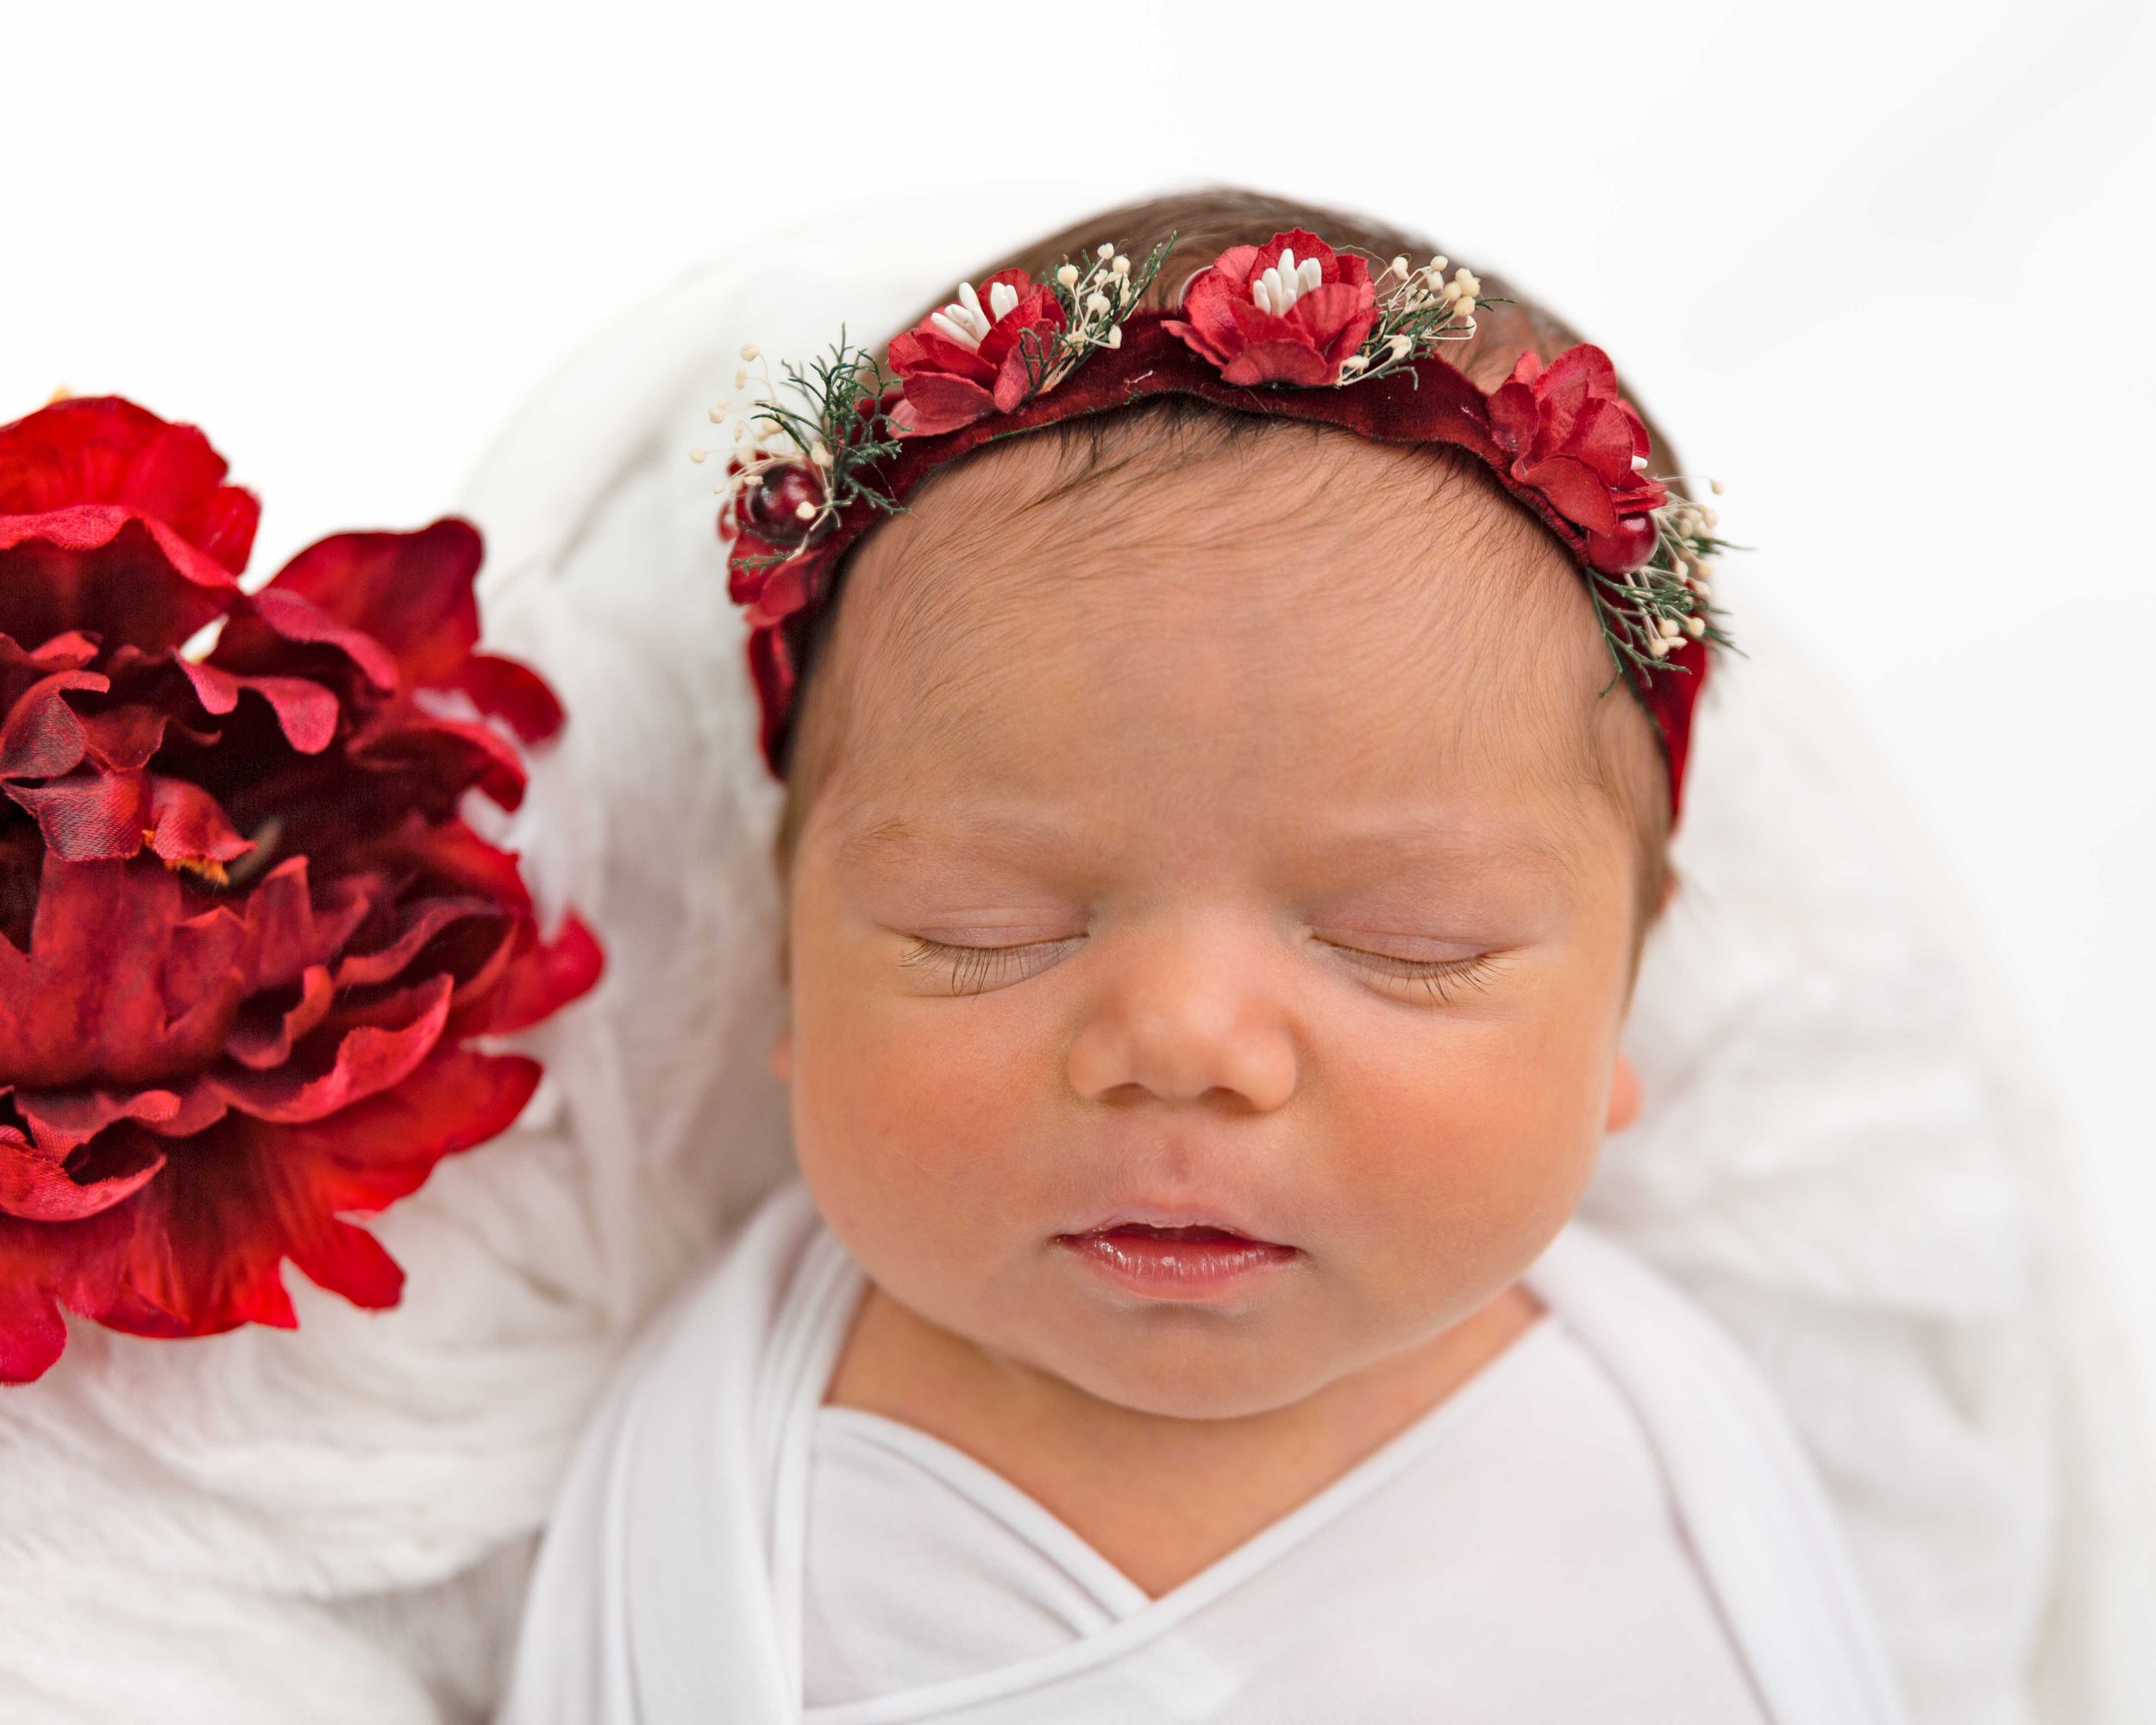 Newborn-baby-girl-photography-infant-images-family-photos-spokane-washington-8.jpg